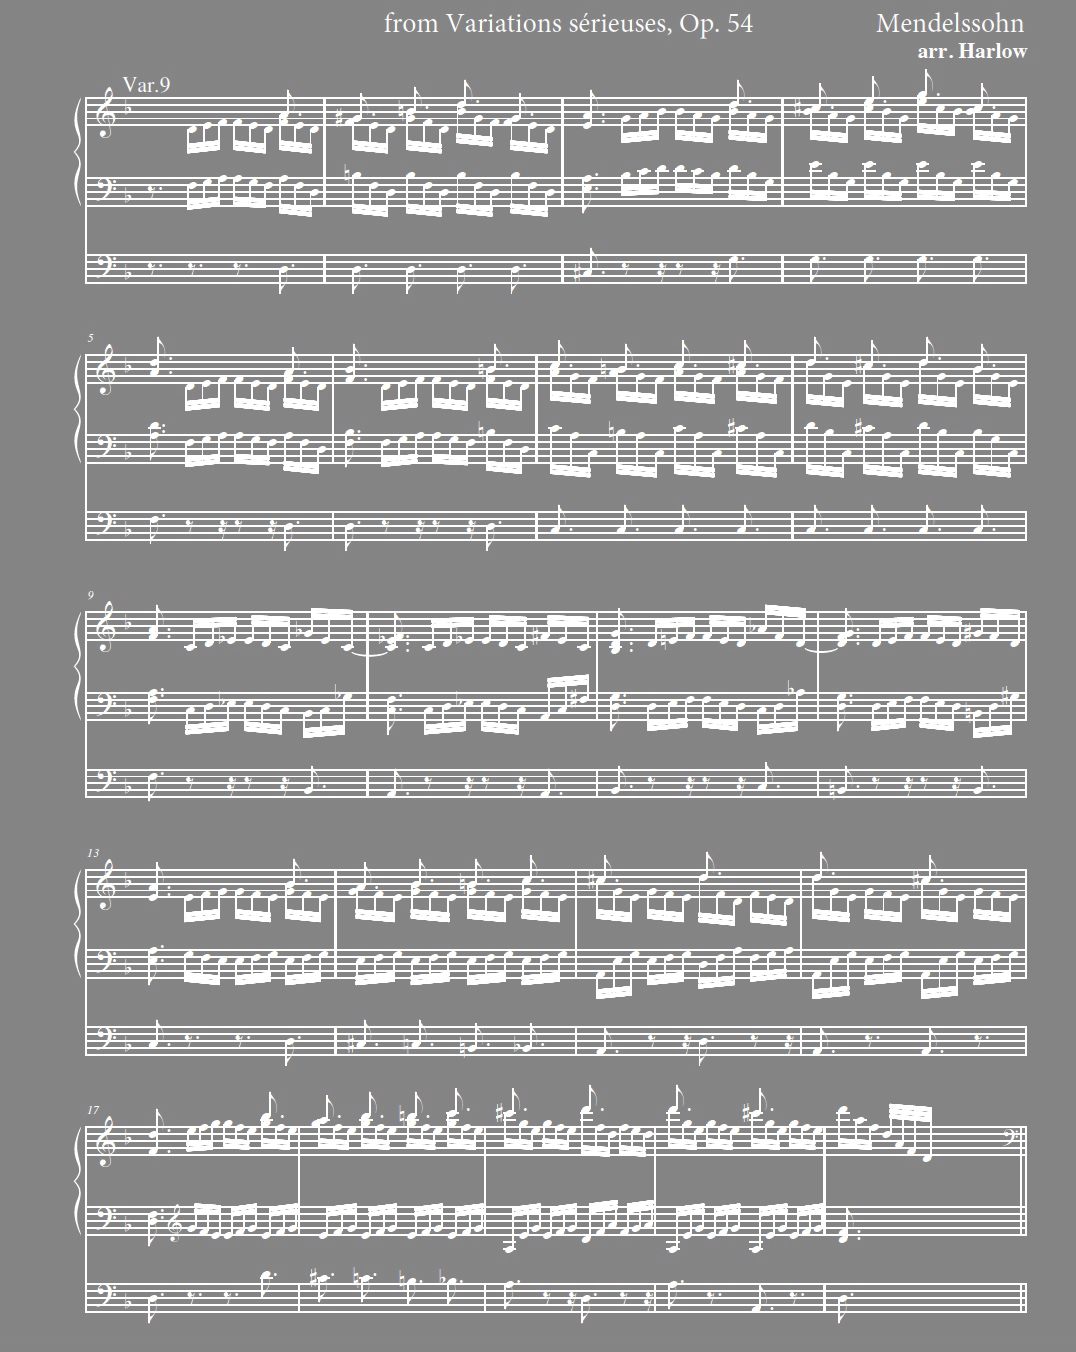 Mendelssohn Variations Serieuses for organ